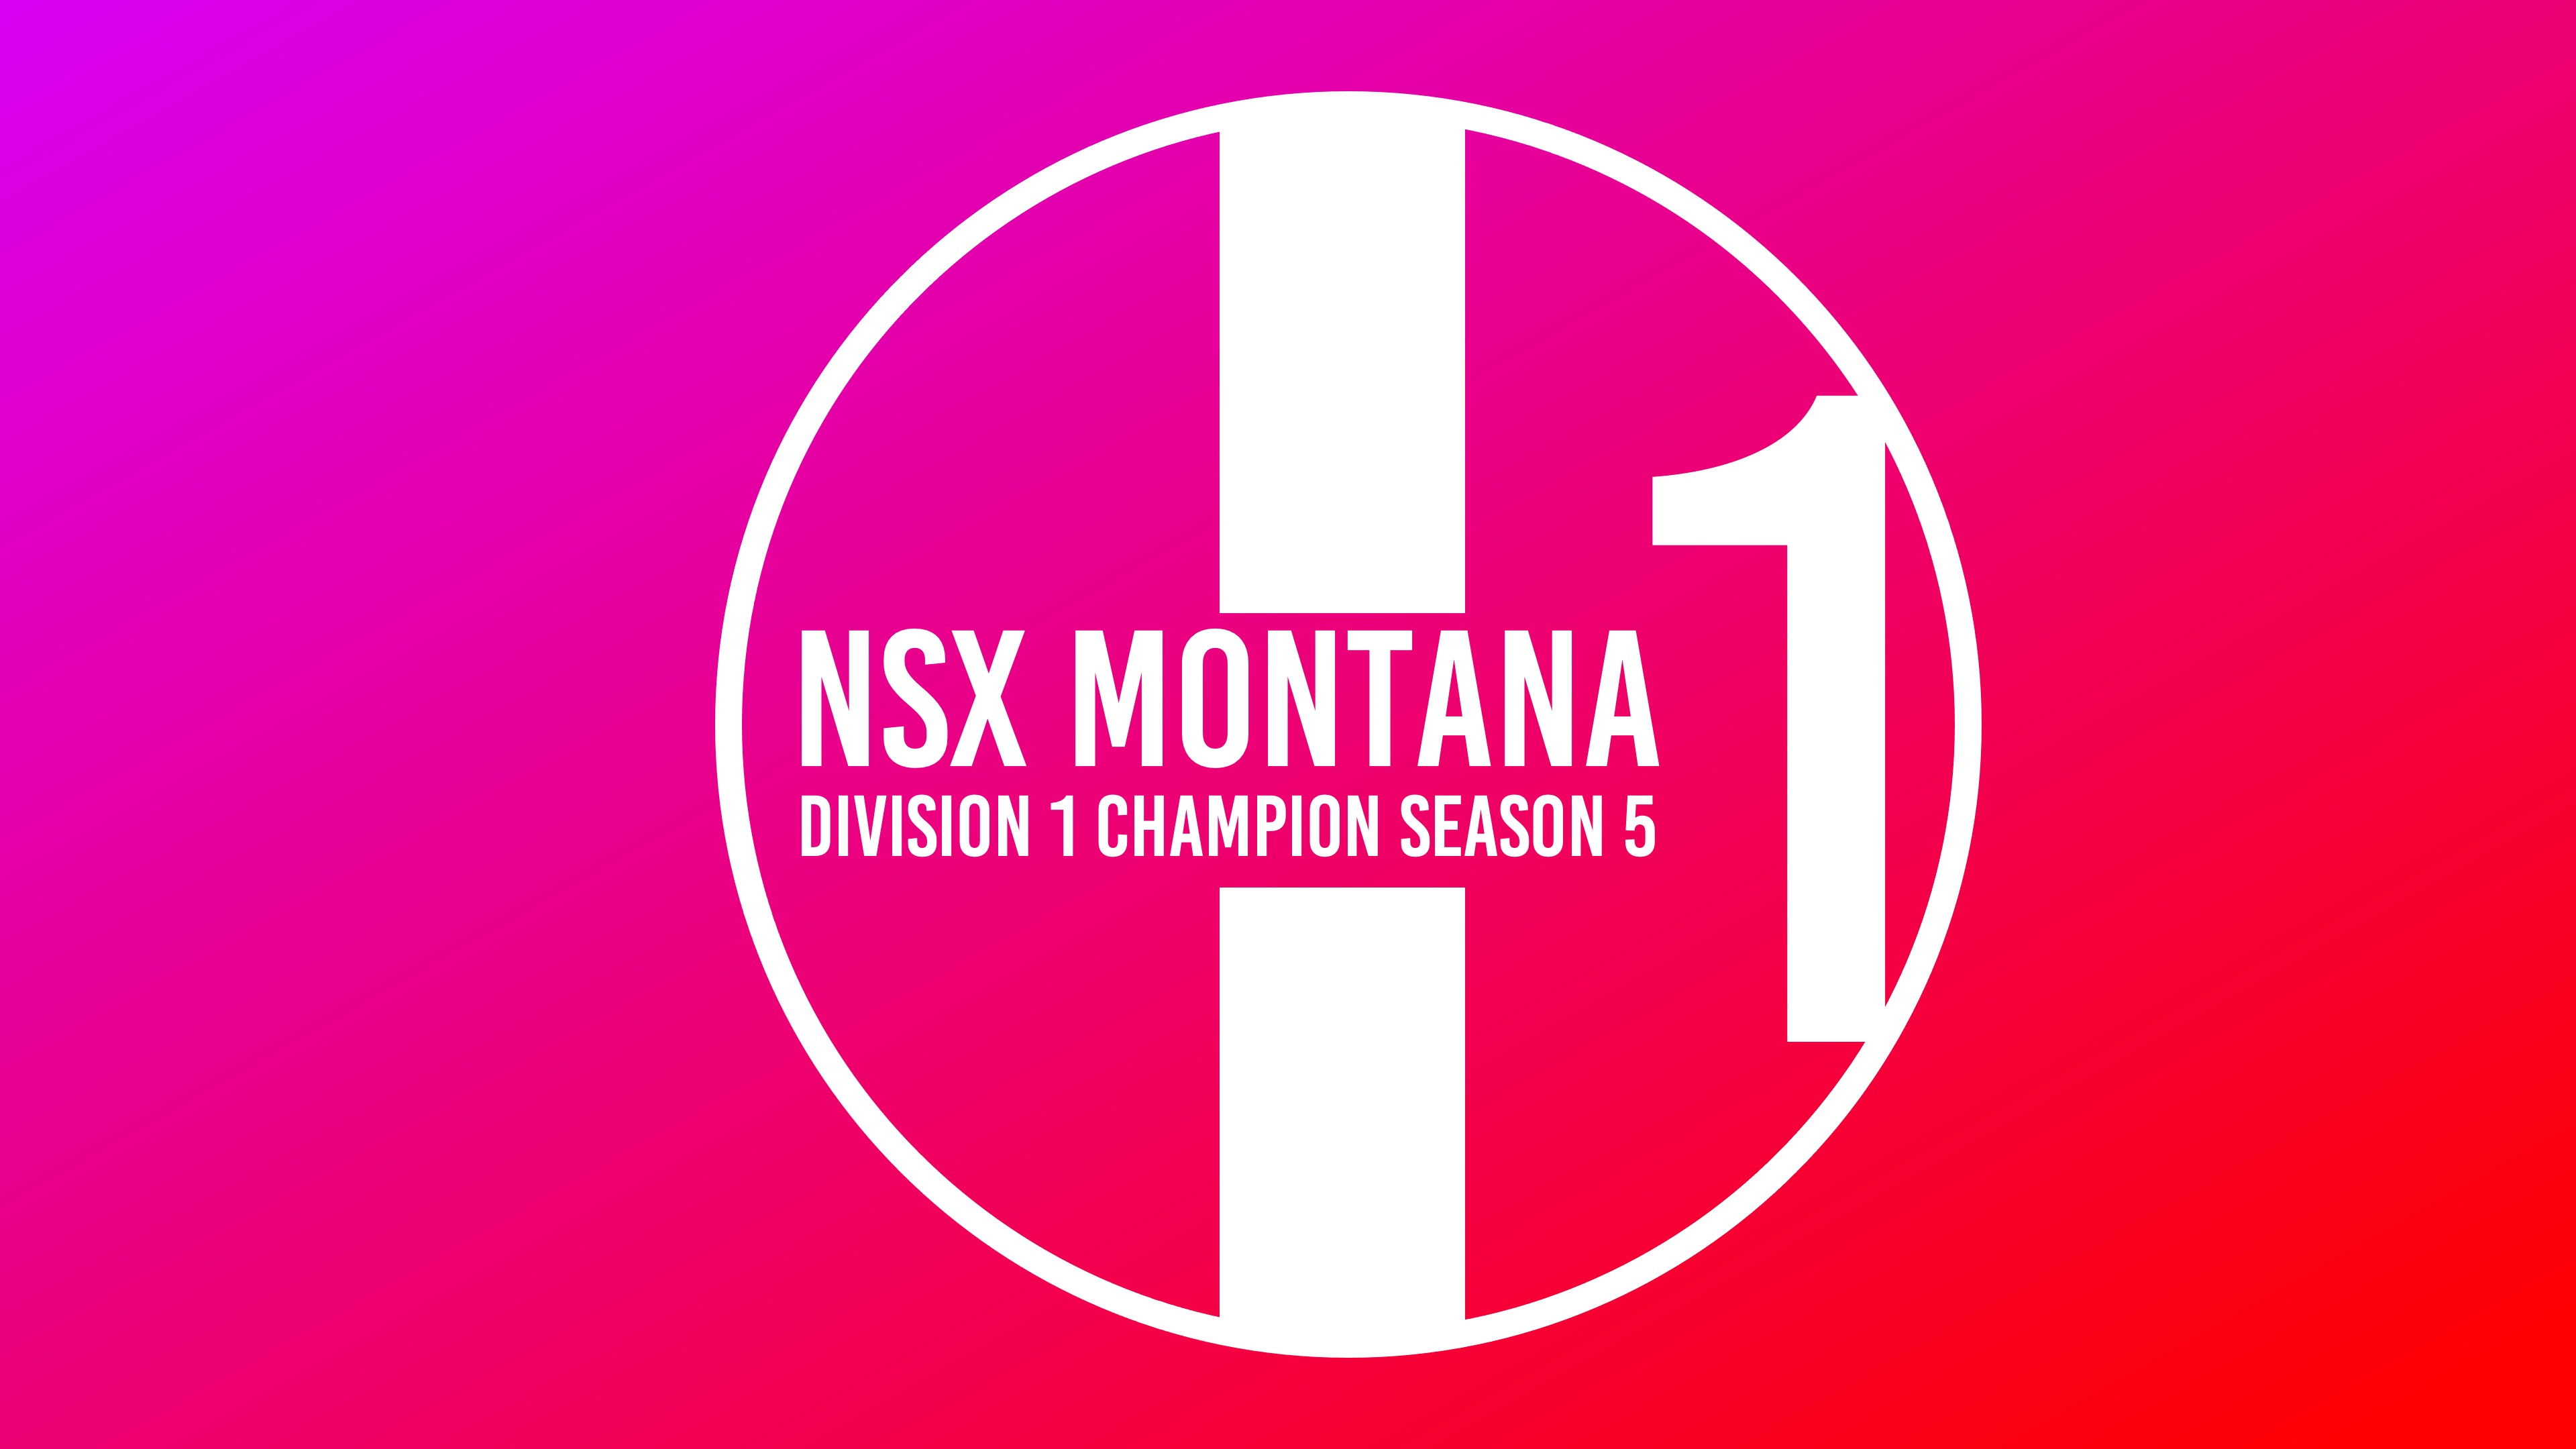 Division 1 Champion - NSX_Montana